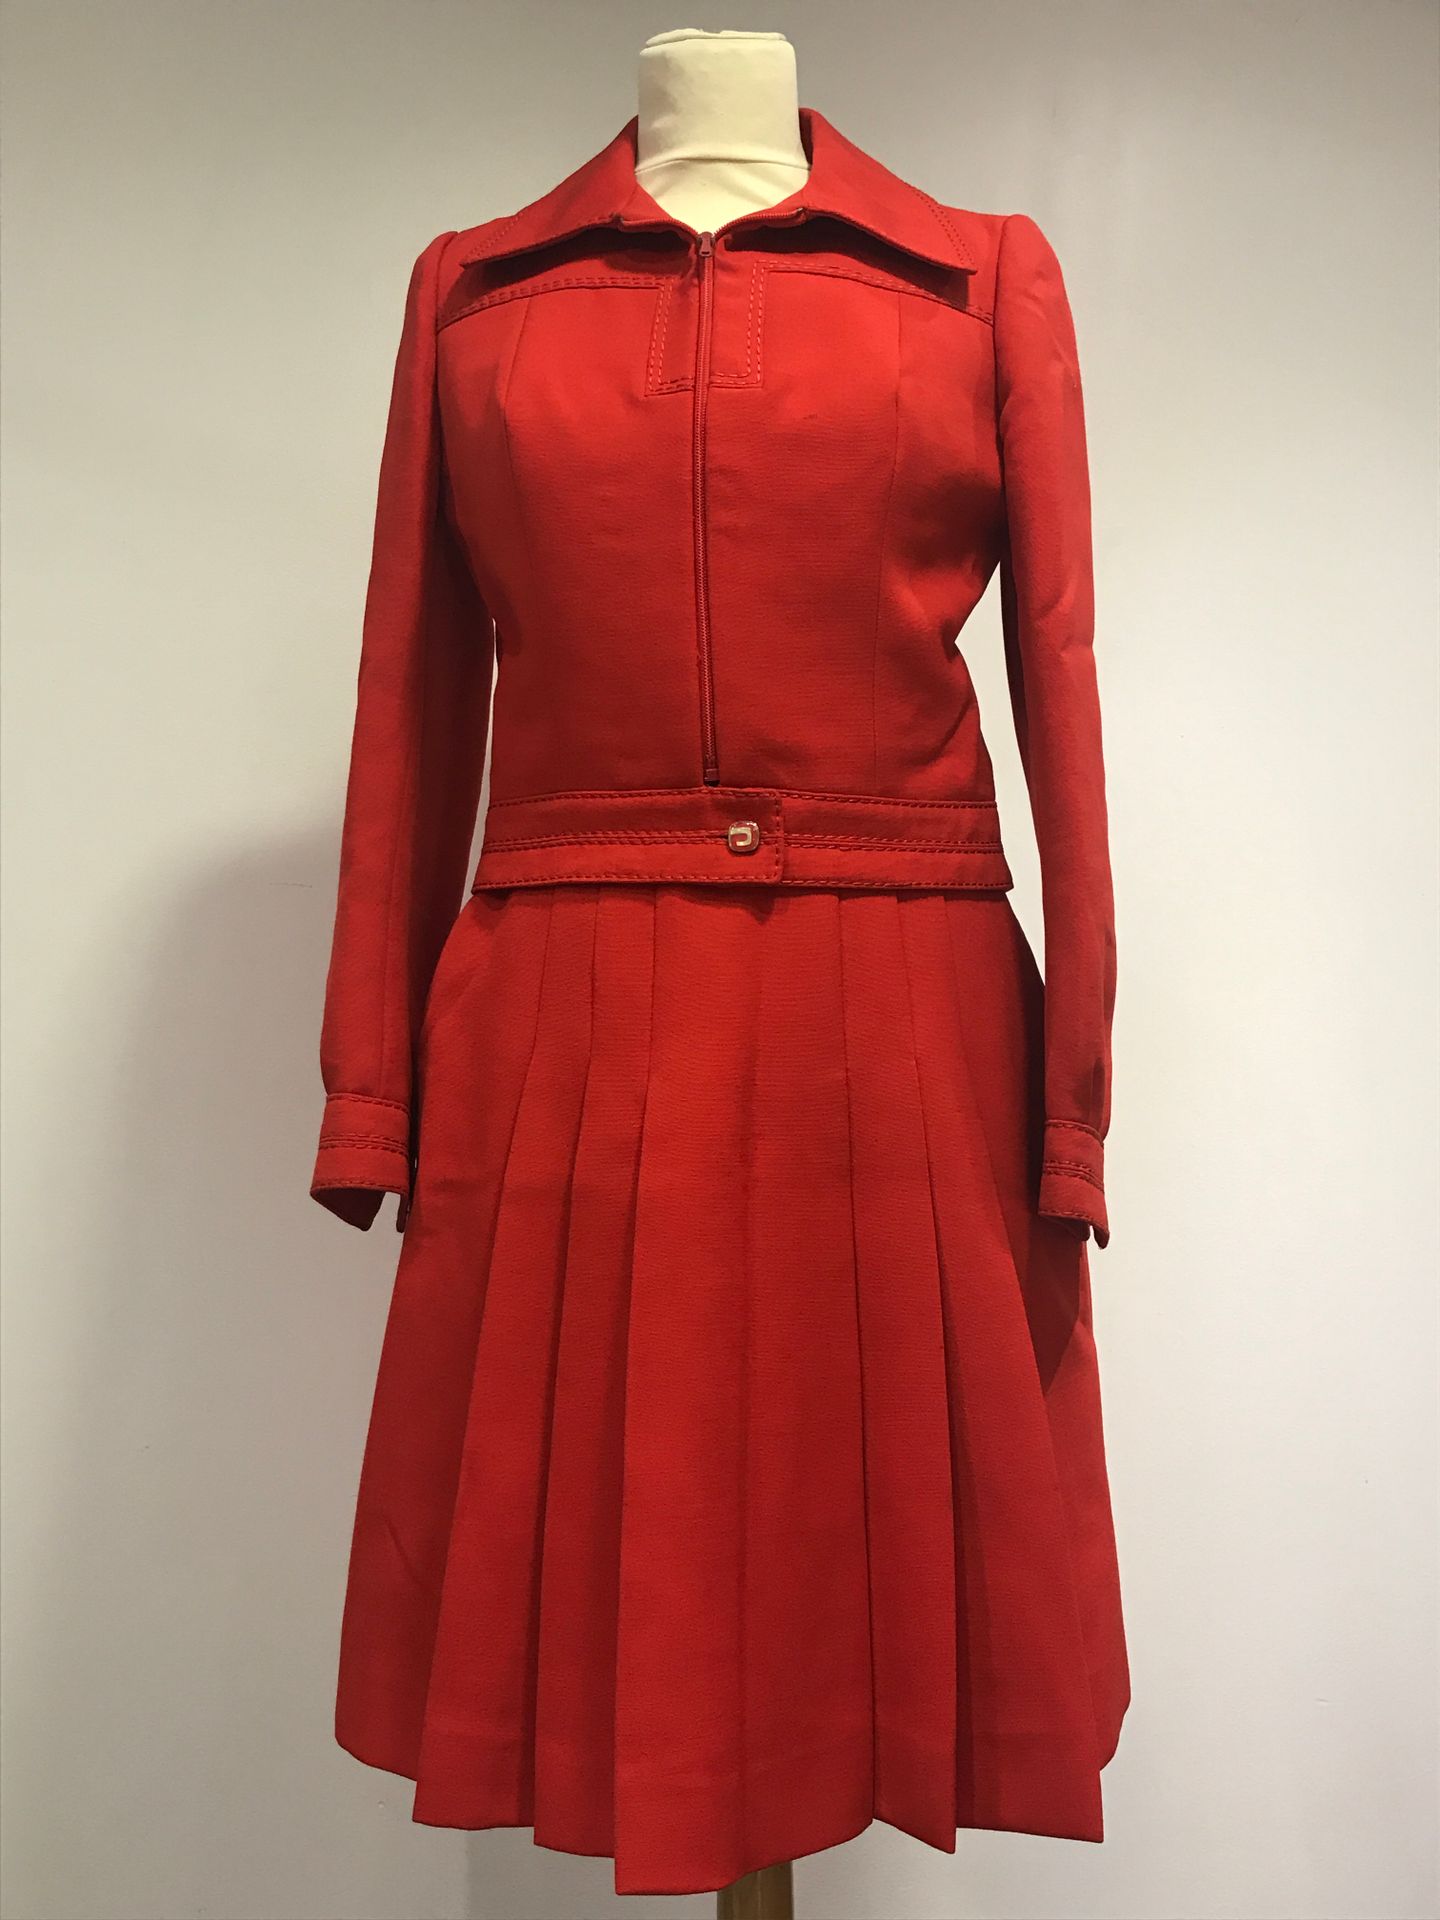 Null Lyza Couture - 3件套，裙子和长裤，大红色羊毛布，包括一件 "Bombers "类型的外套，大折领，切割和缝合工作，腰部有皮带，前面有拉&hellip;